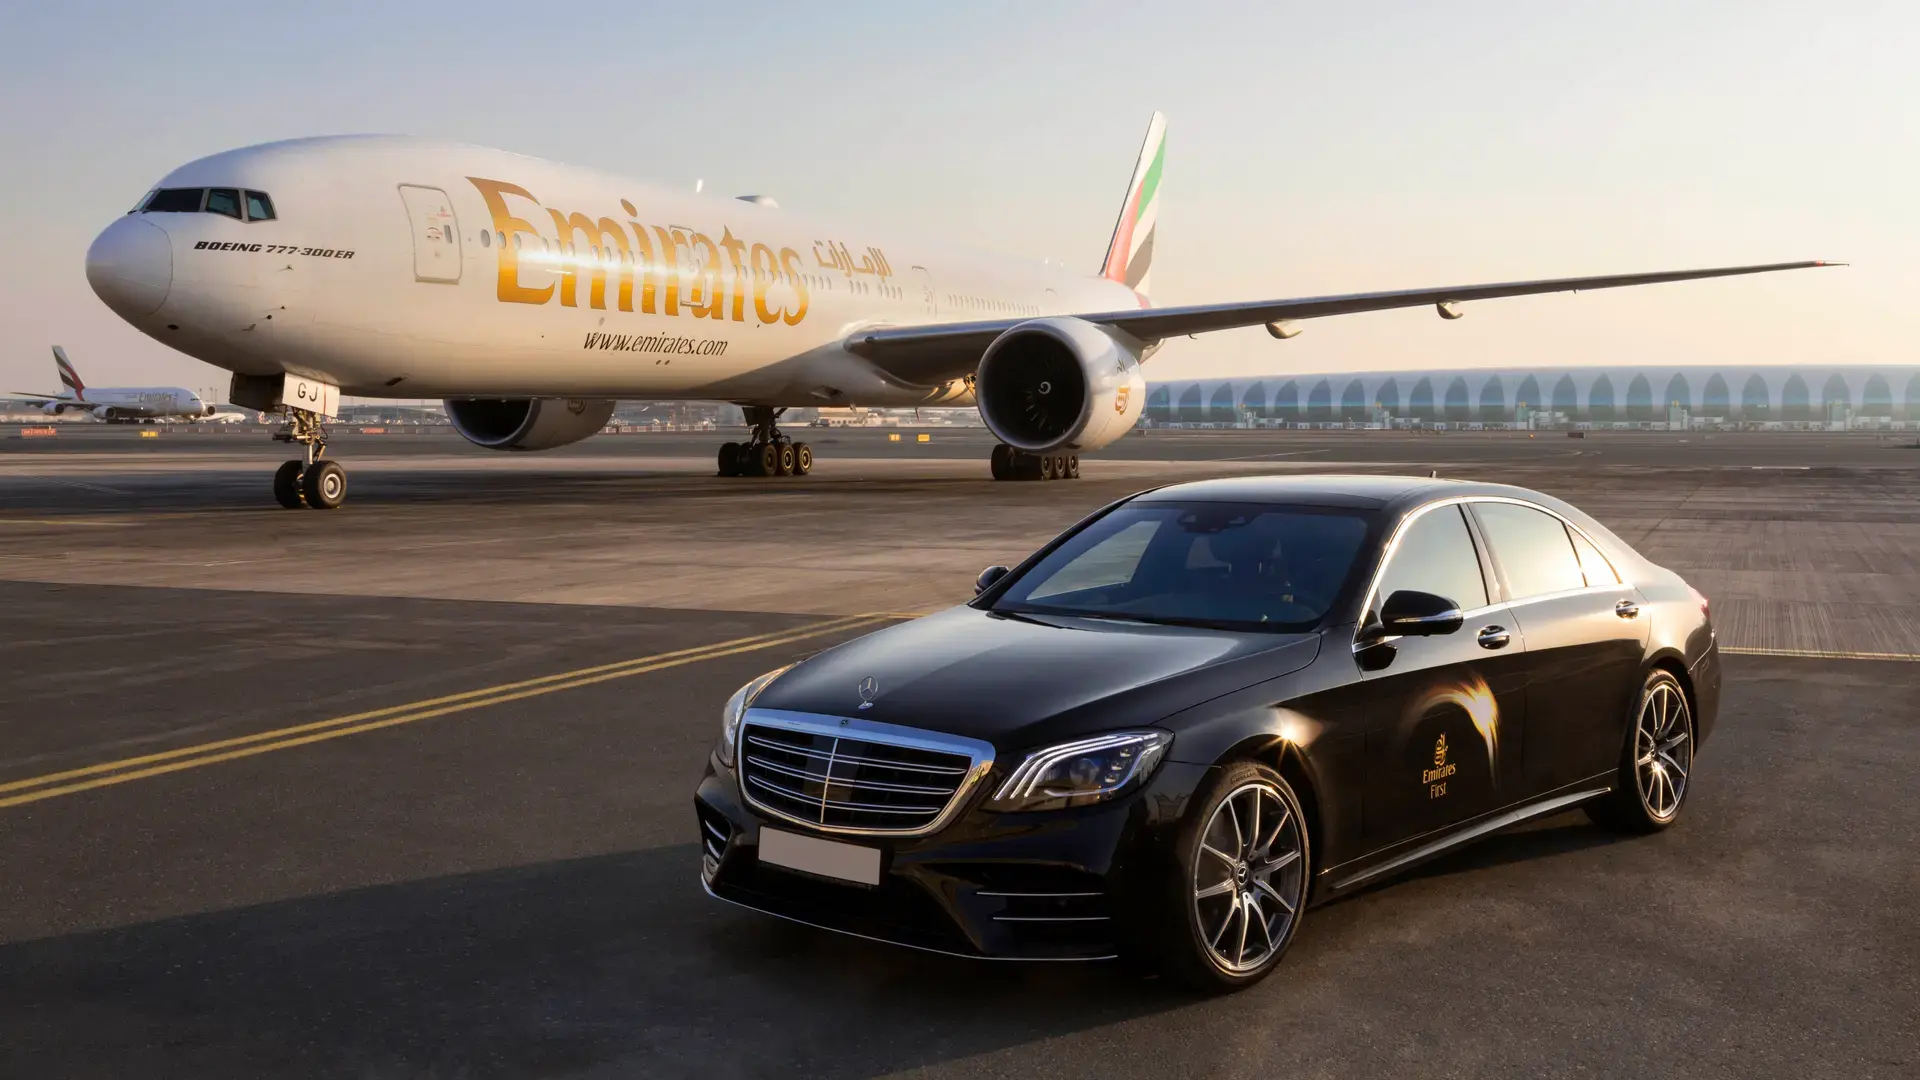 Emirates chauffeur service